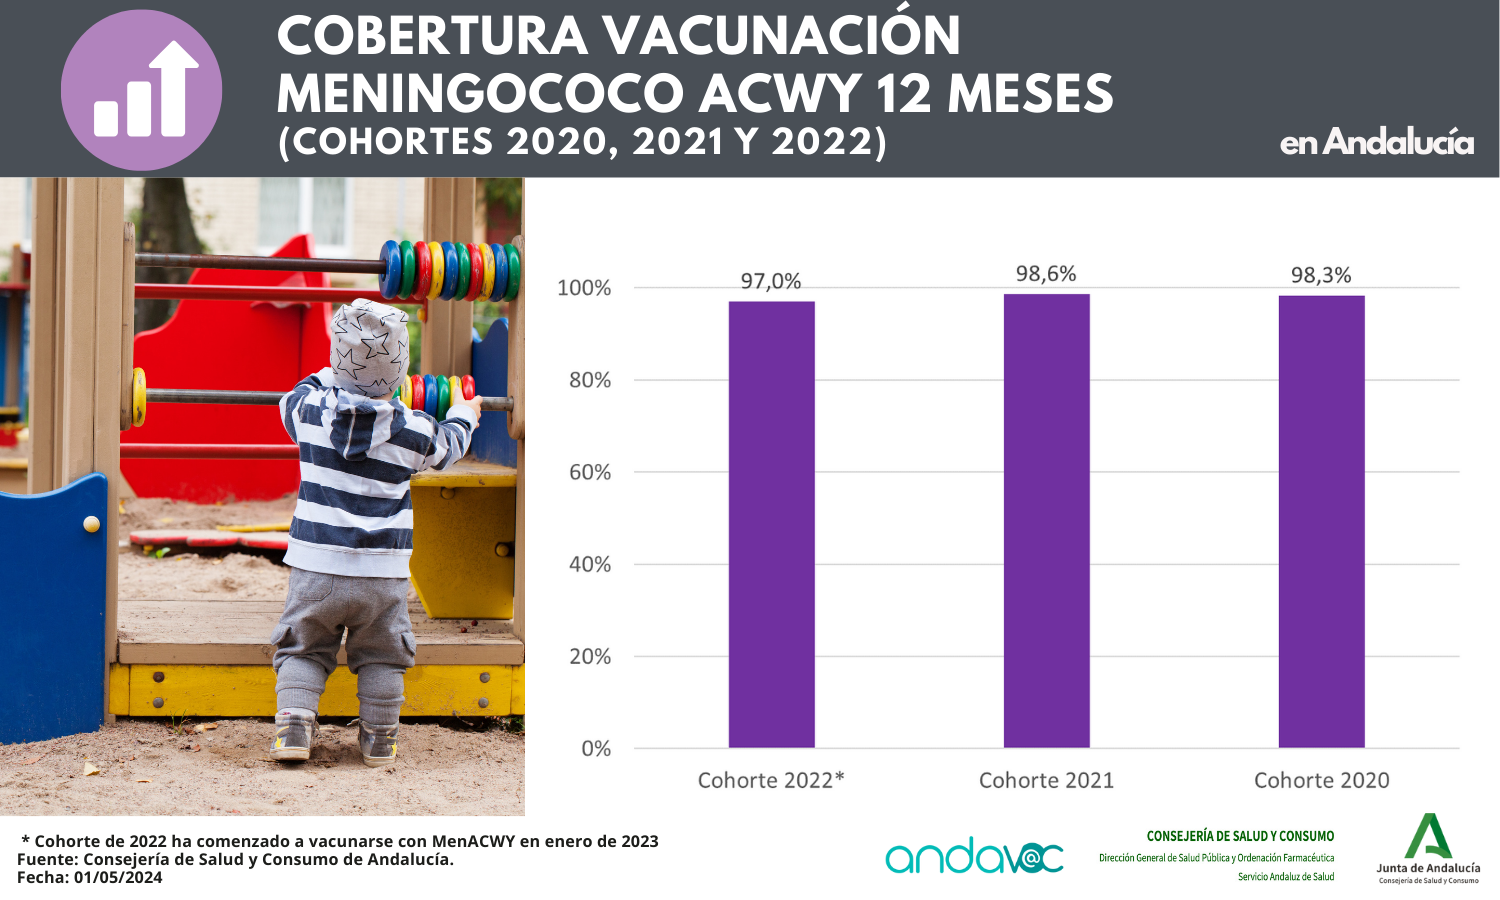 Cobertura vacunal meningococo ACWY 12 meses en Andalucía